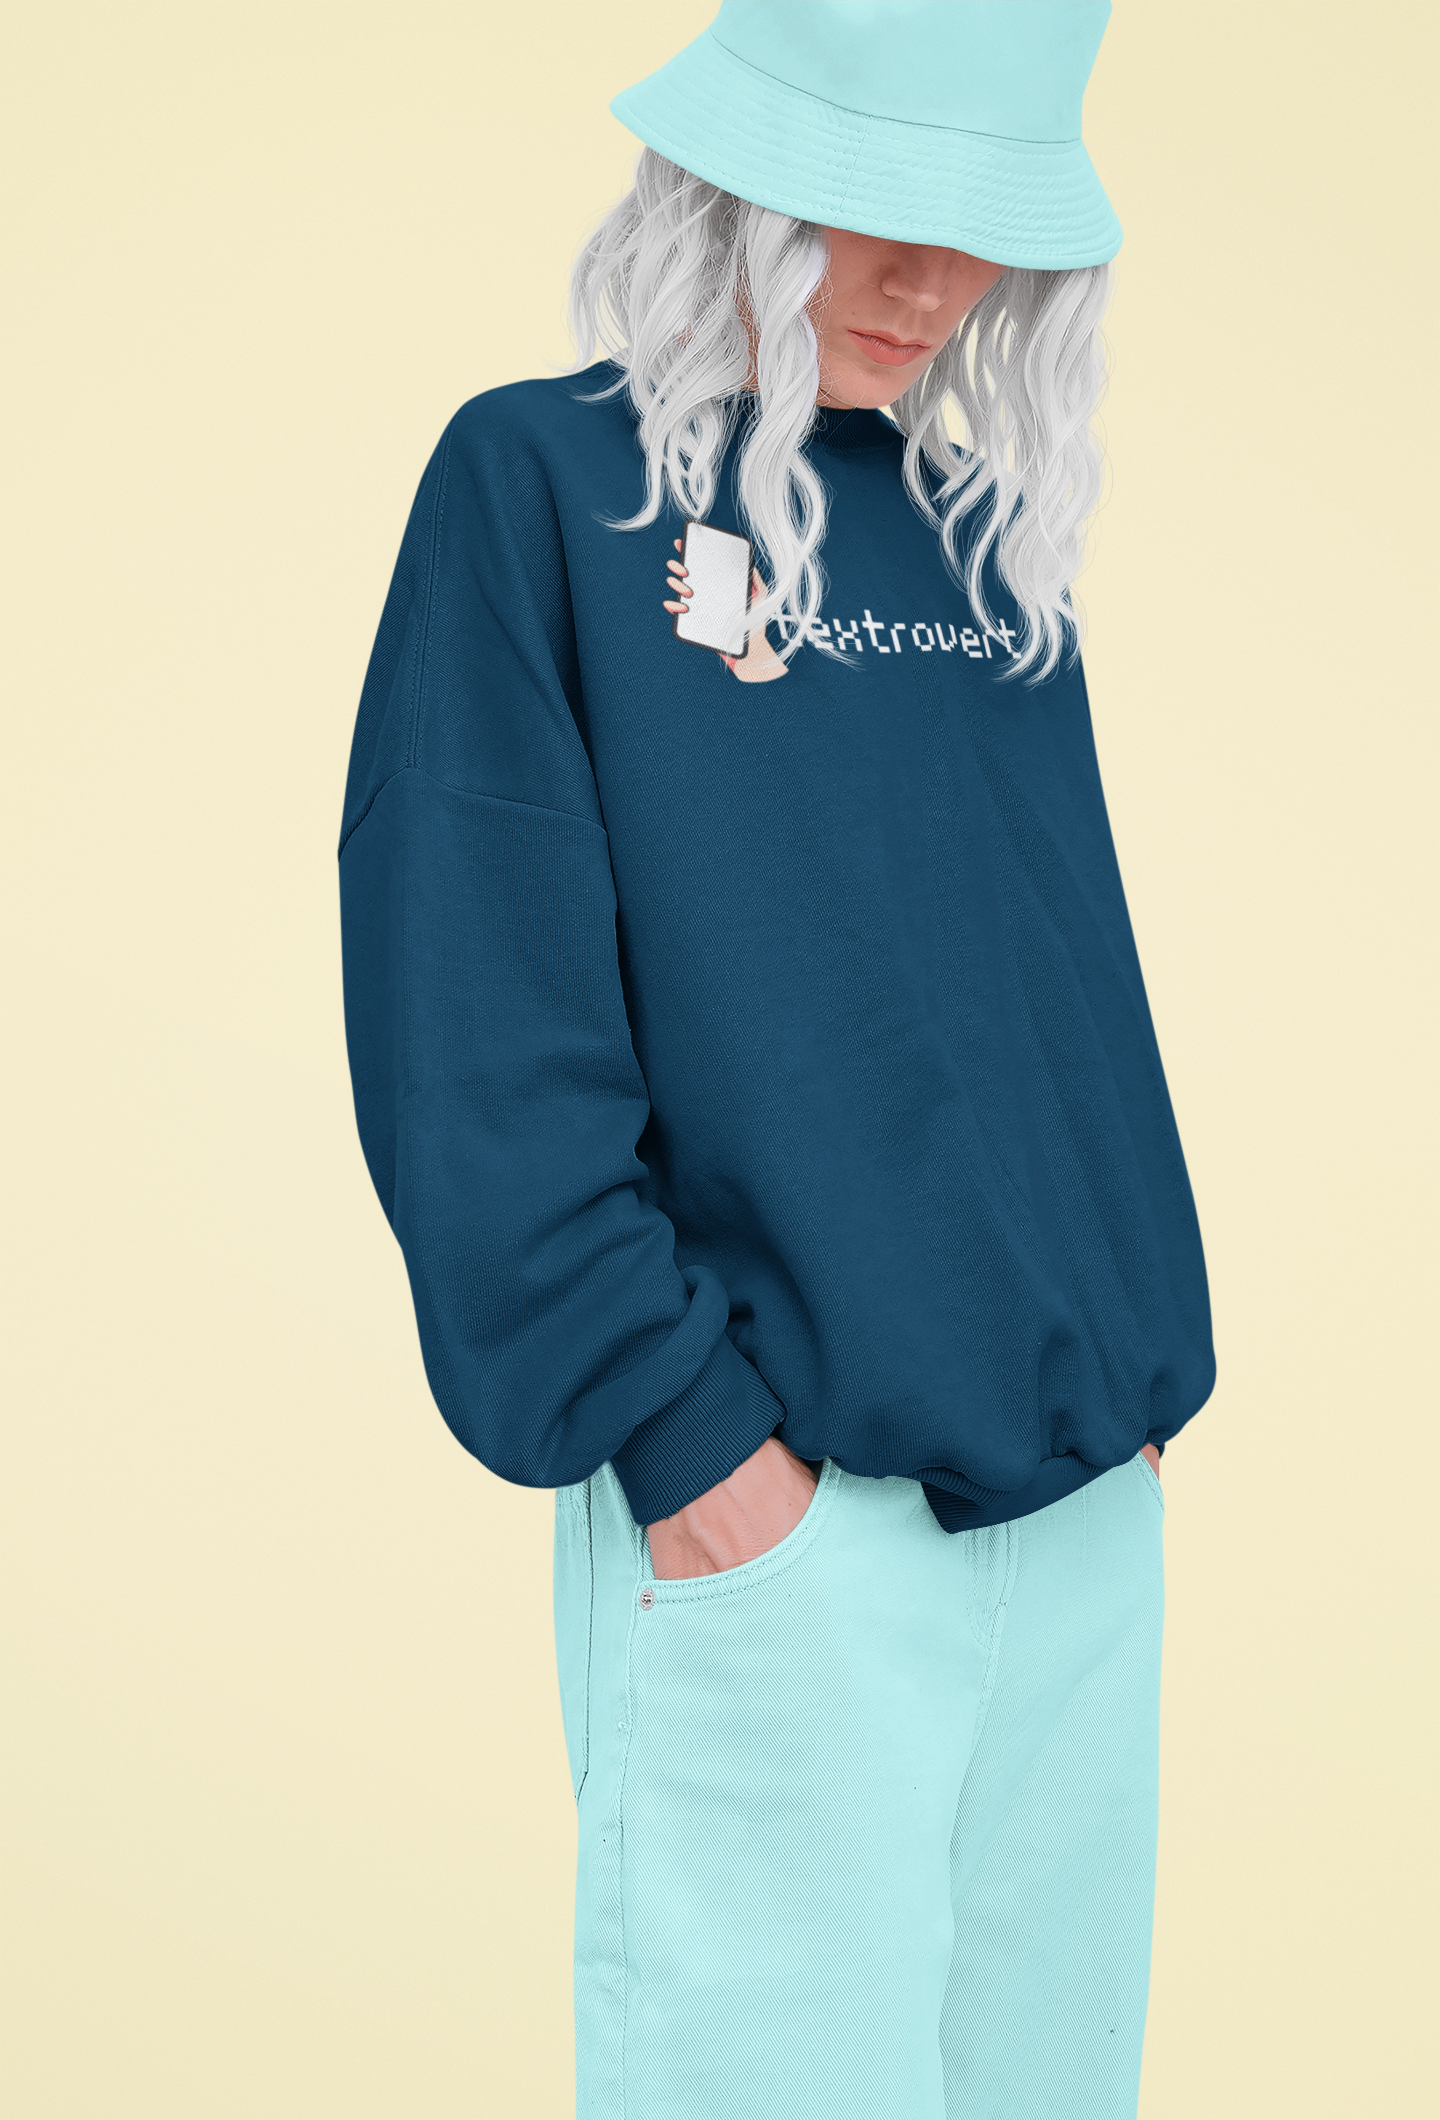 Unisex Textrovert Sweatshirt